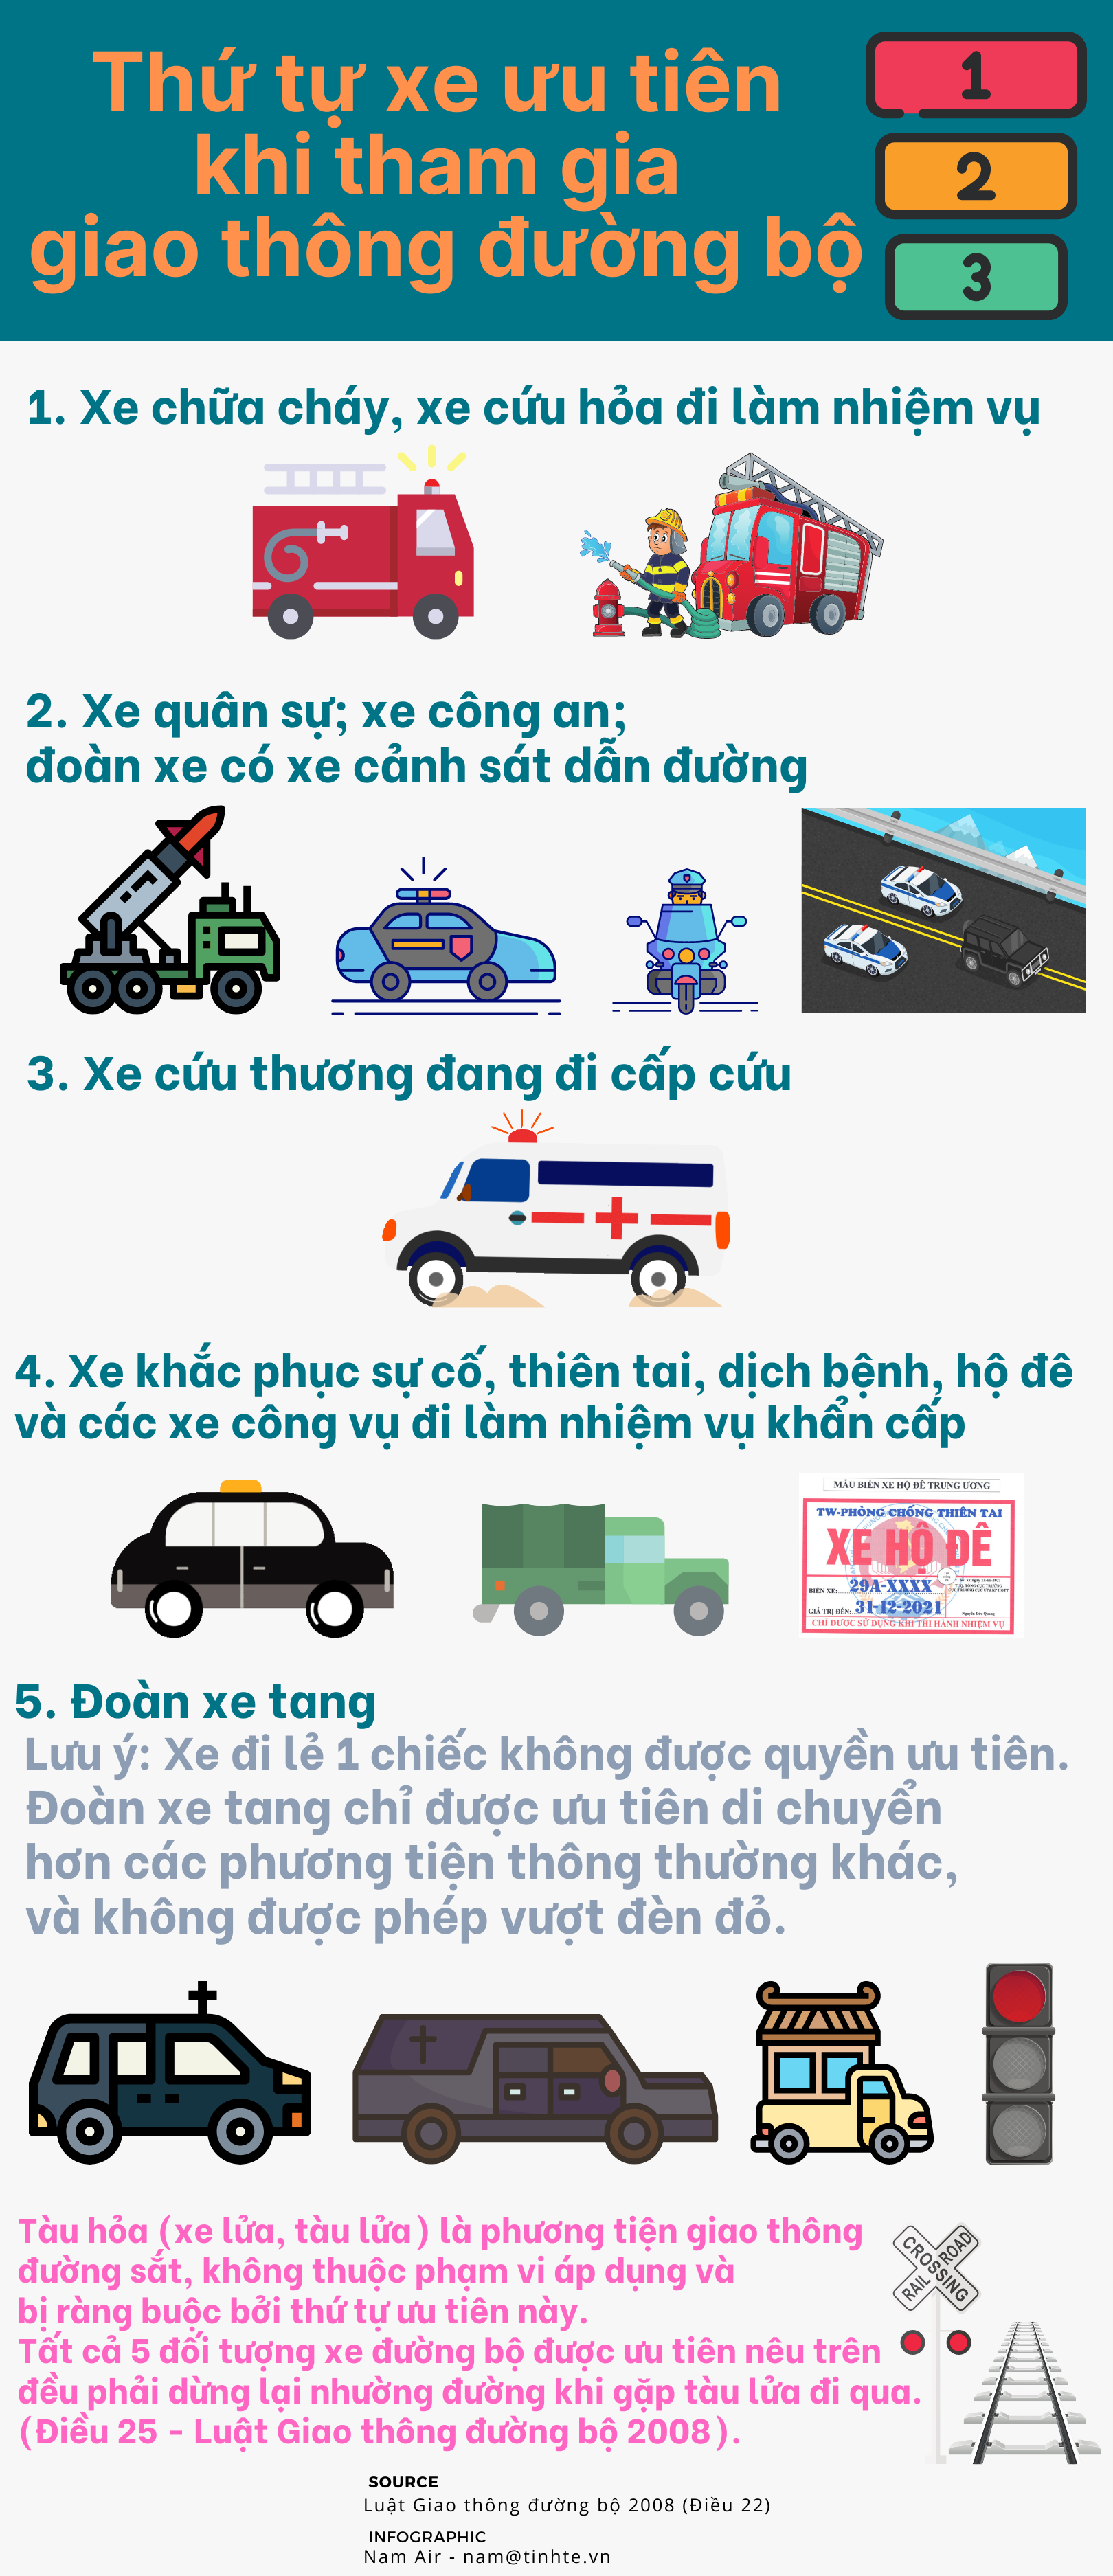 tinhte-infographic-thu-tu-xe-uu-tien.png